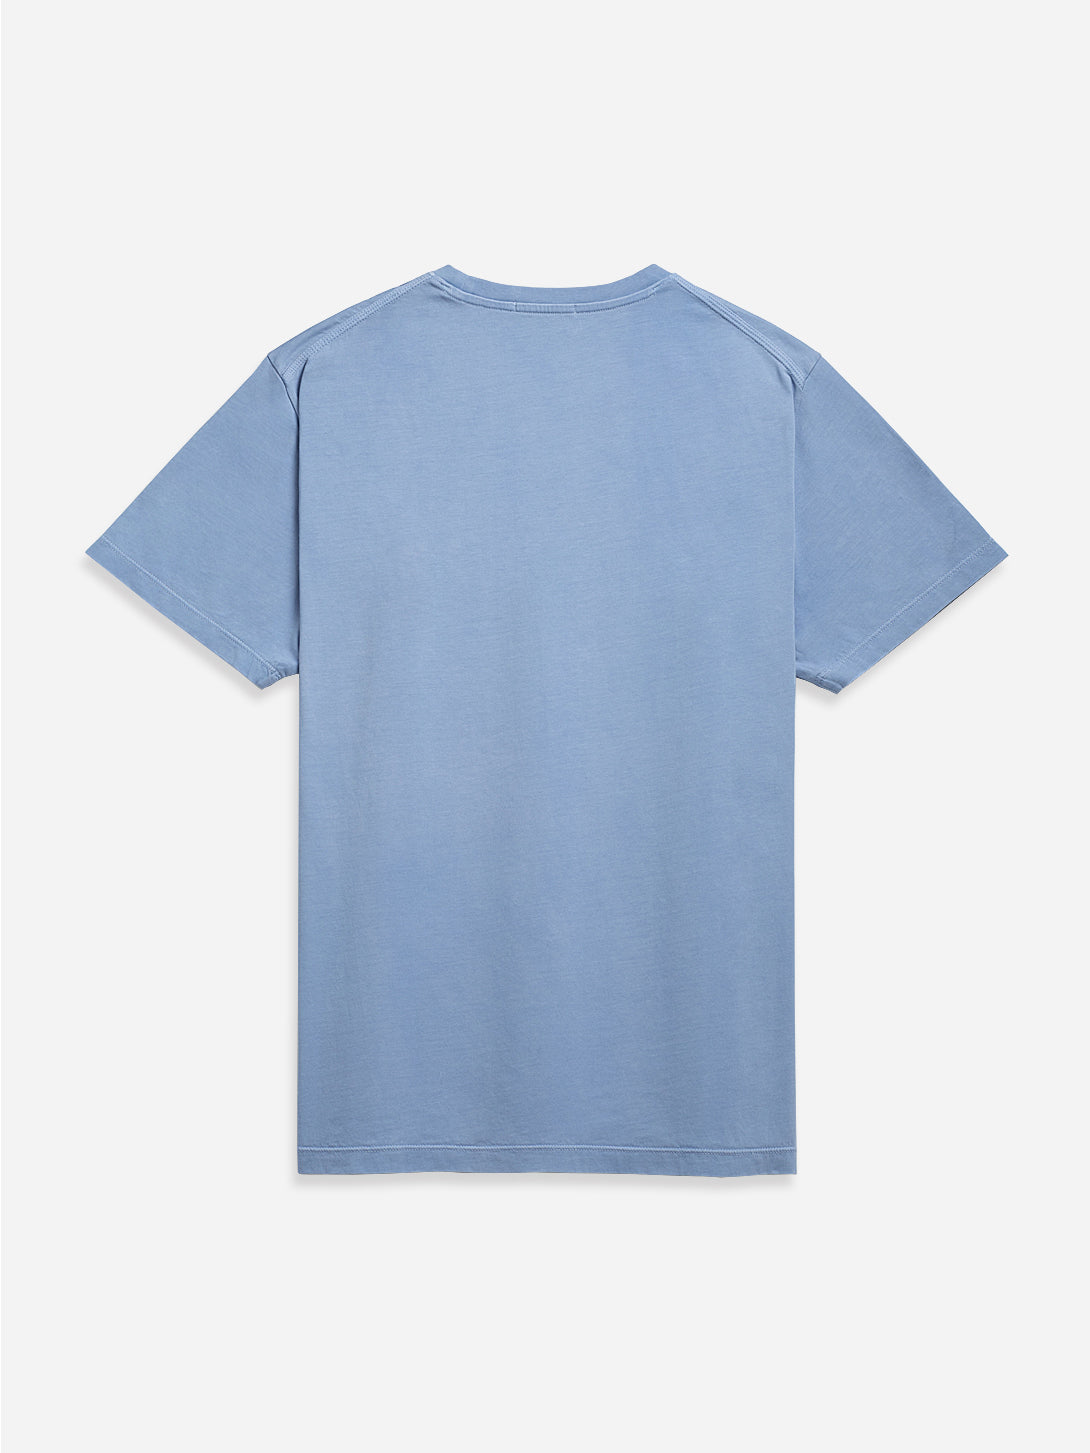 LAVENDER BLUE Village Crew Neck Tee Seasonal Logo Short Sleeve Shirt